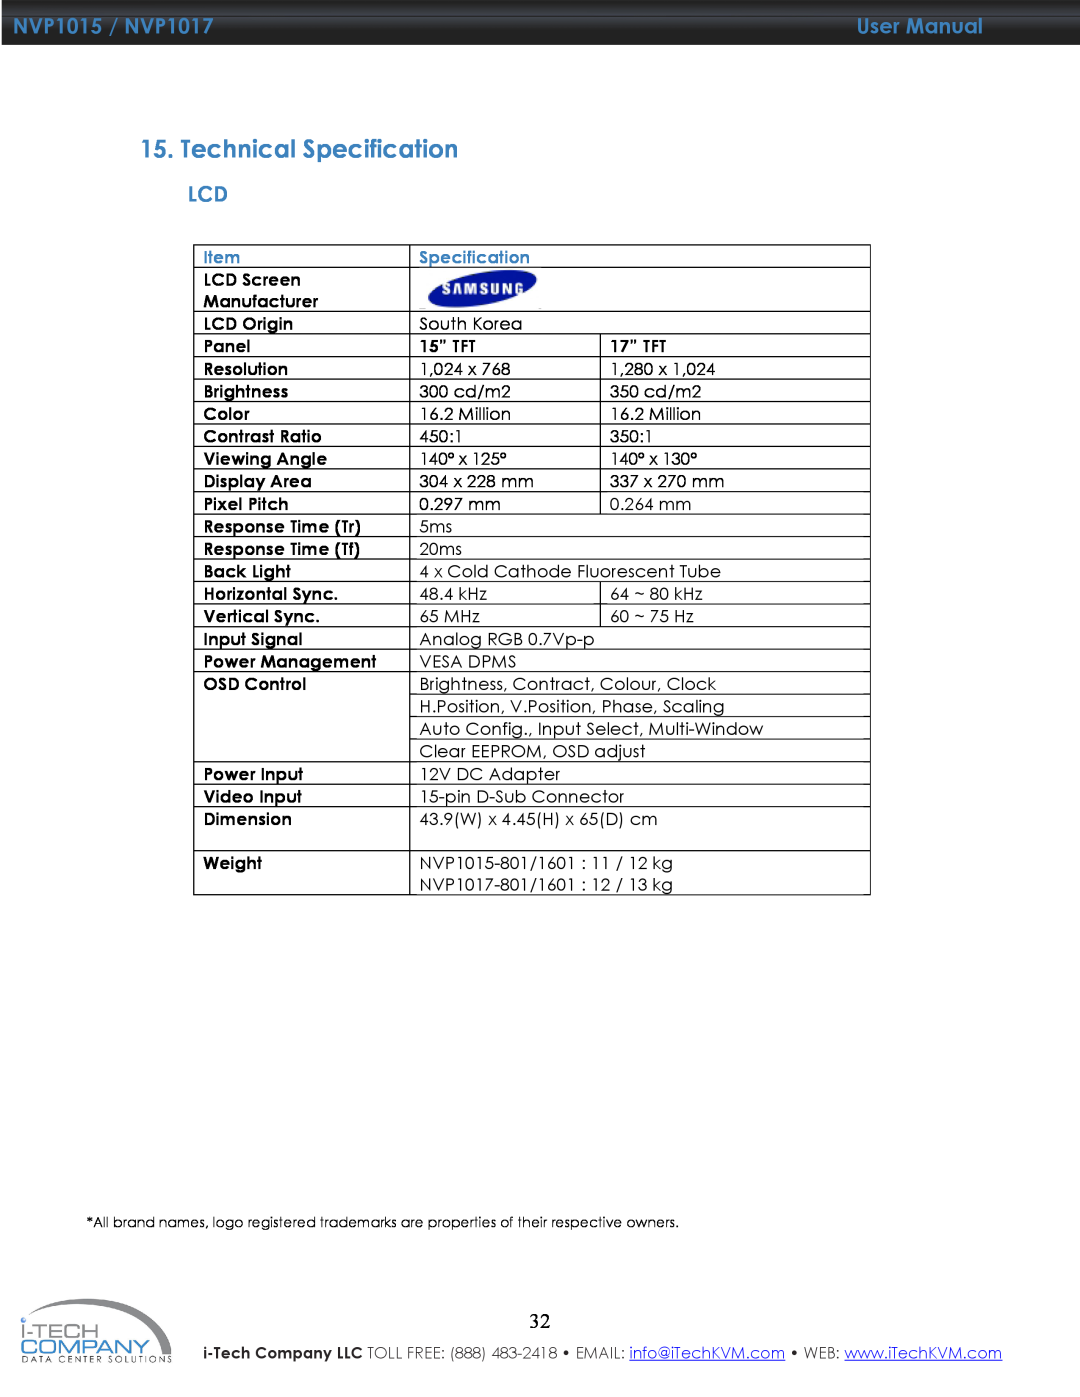 I-Tech Company manual Technical Specification, NVP1015 / NVP1017, User Manual 